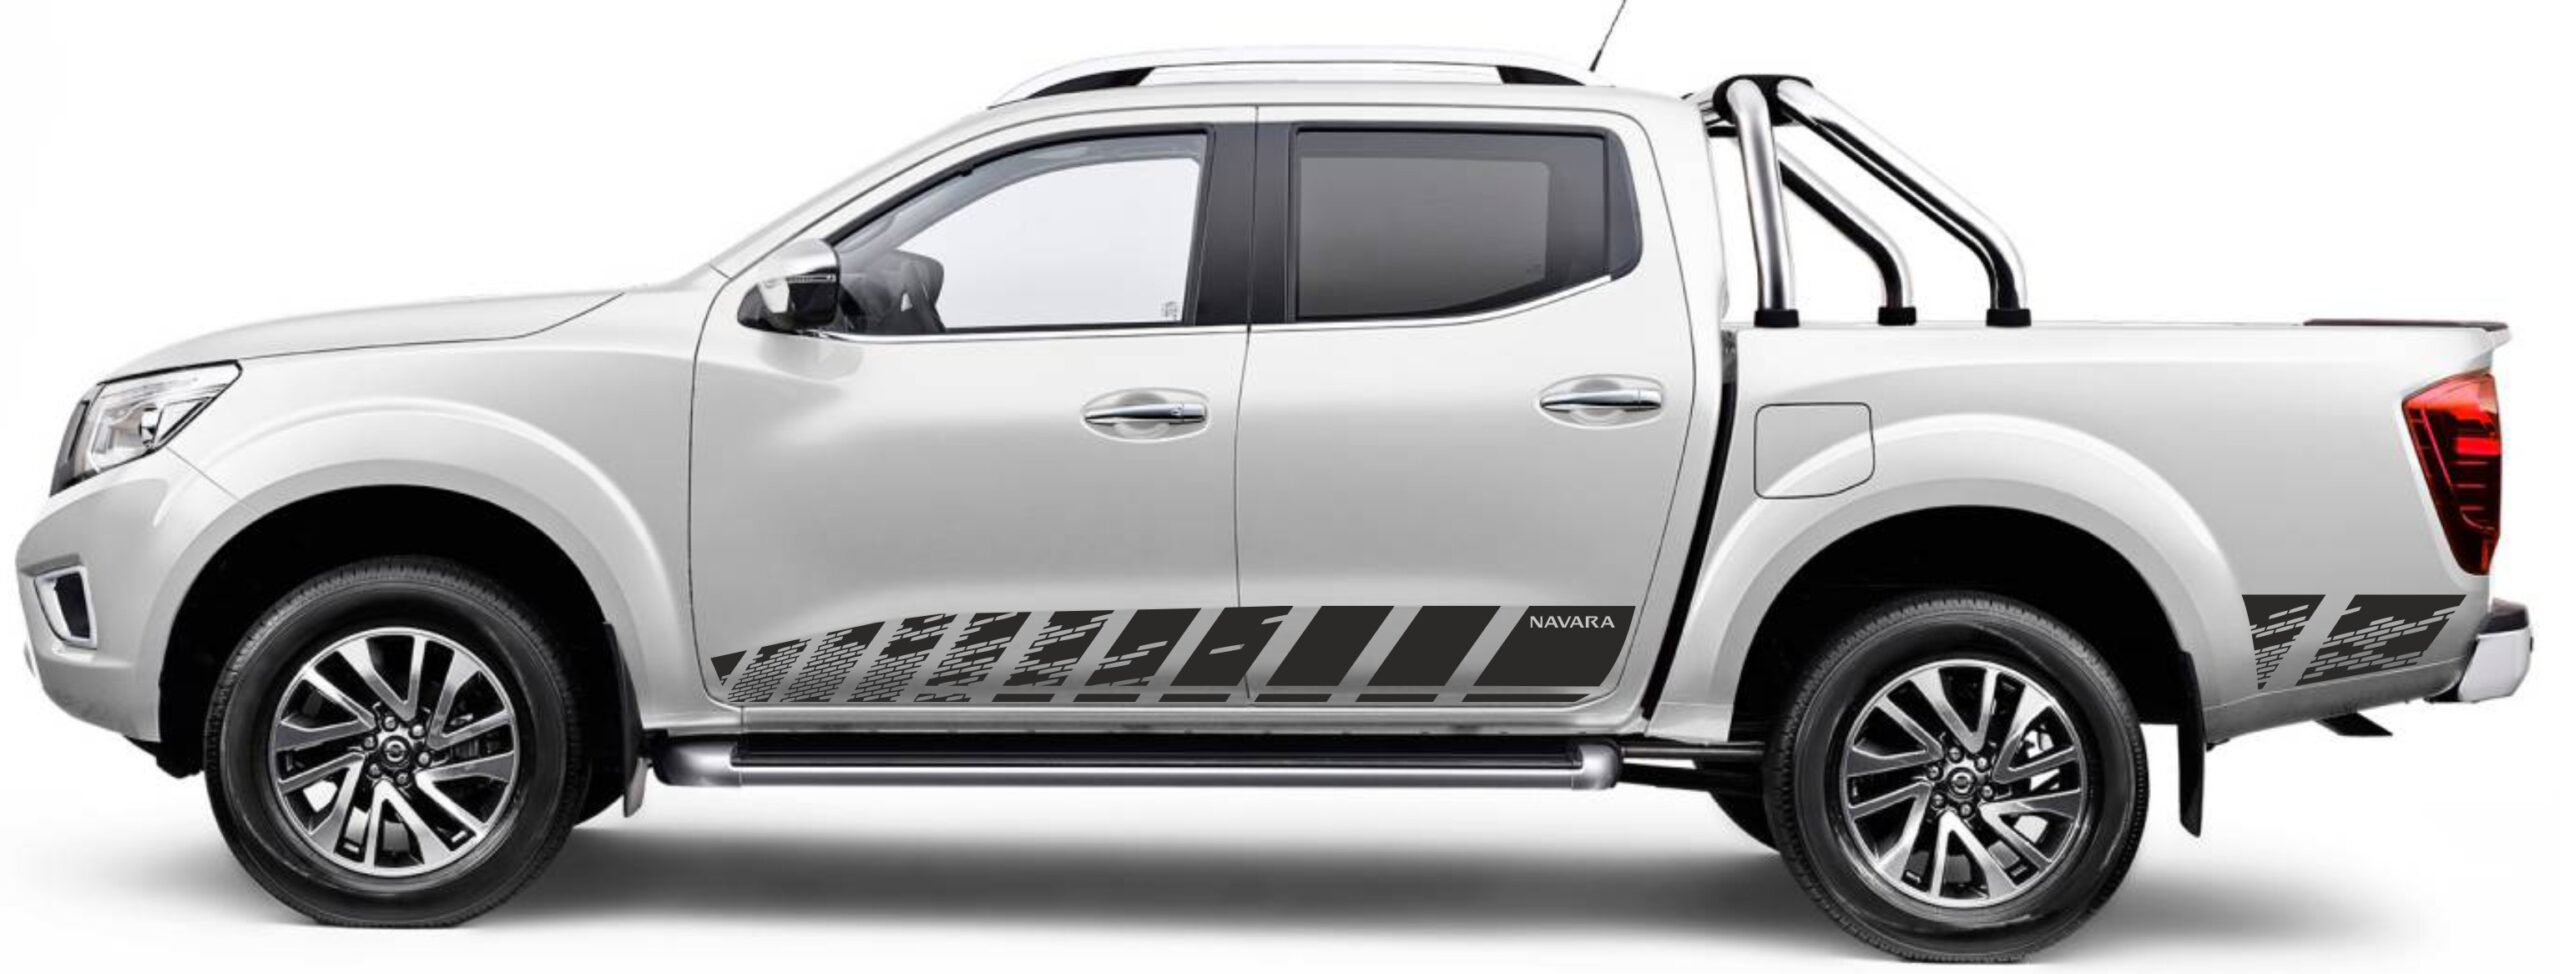 Nissan Navara N Guard naklejki decals stripes sticker aufkleber nalepky samolepky tuning